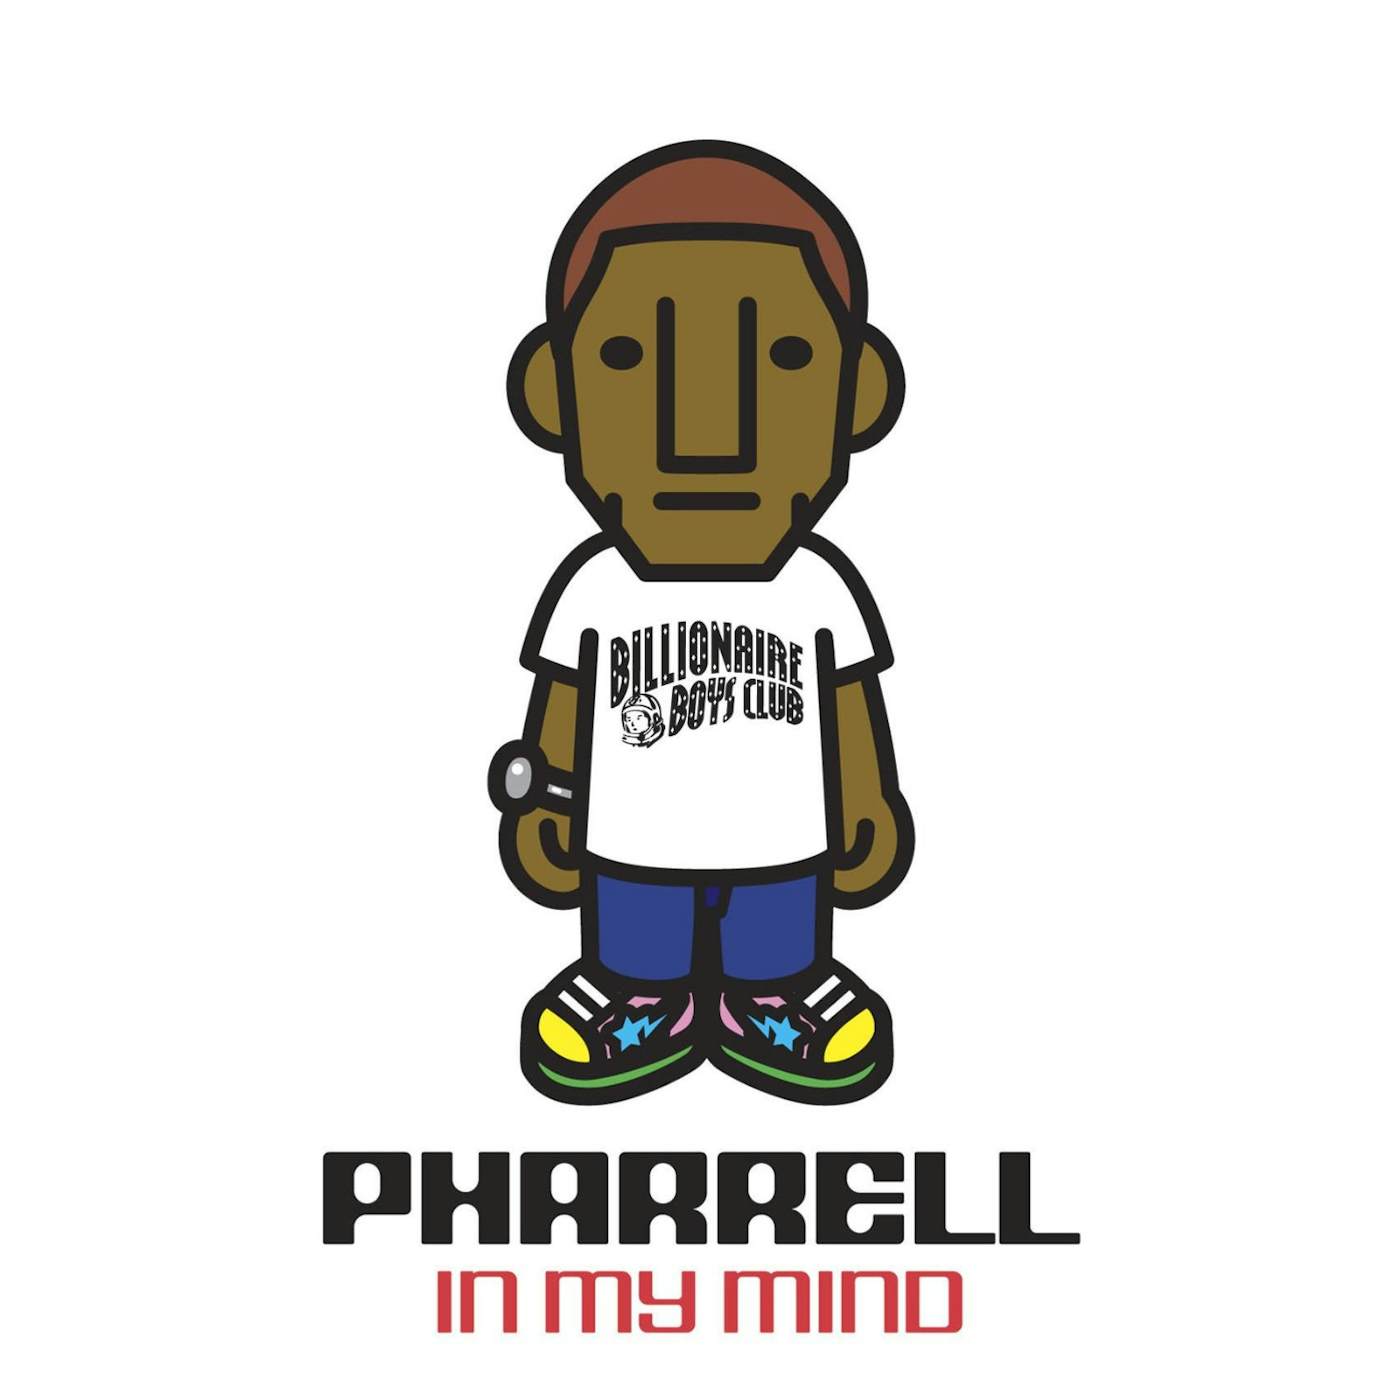 Pharrell Williams IN MY MIND CD